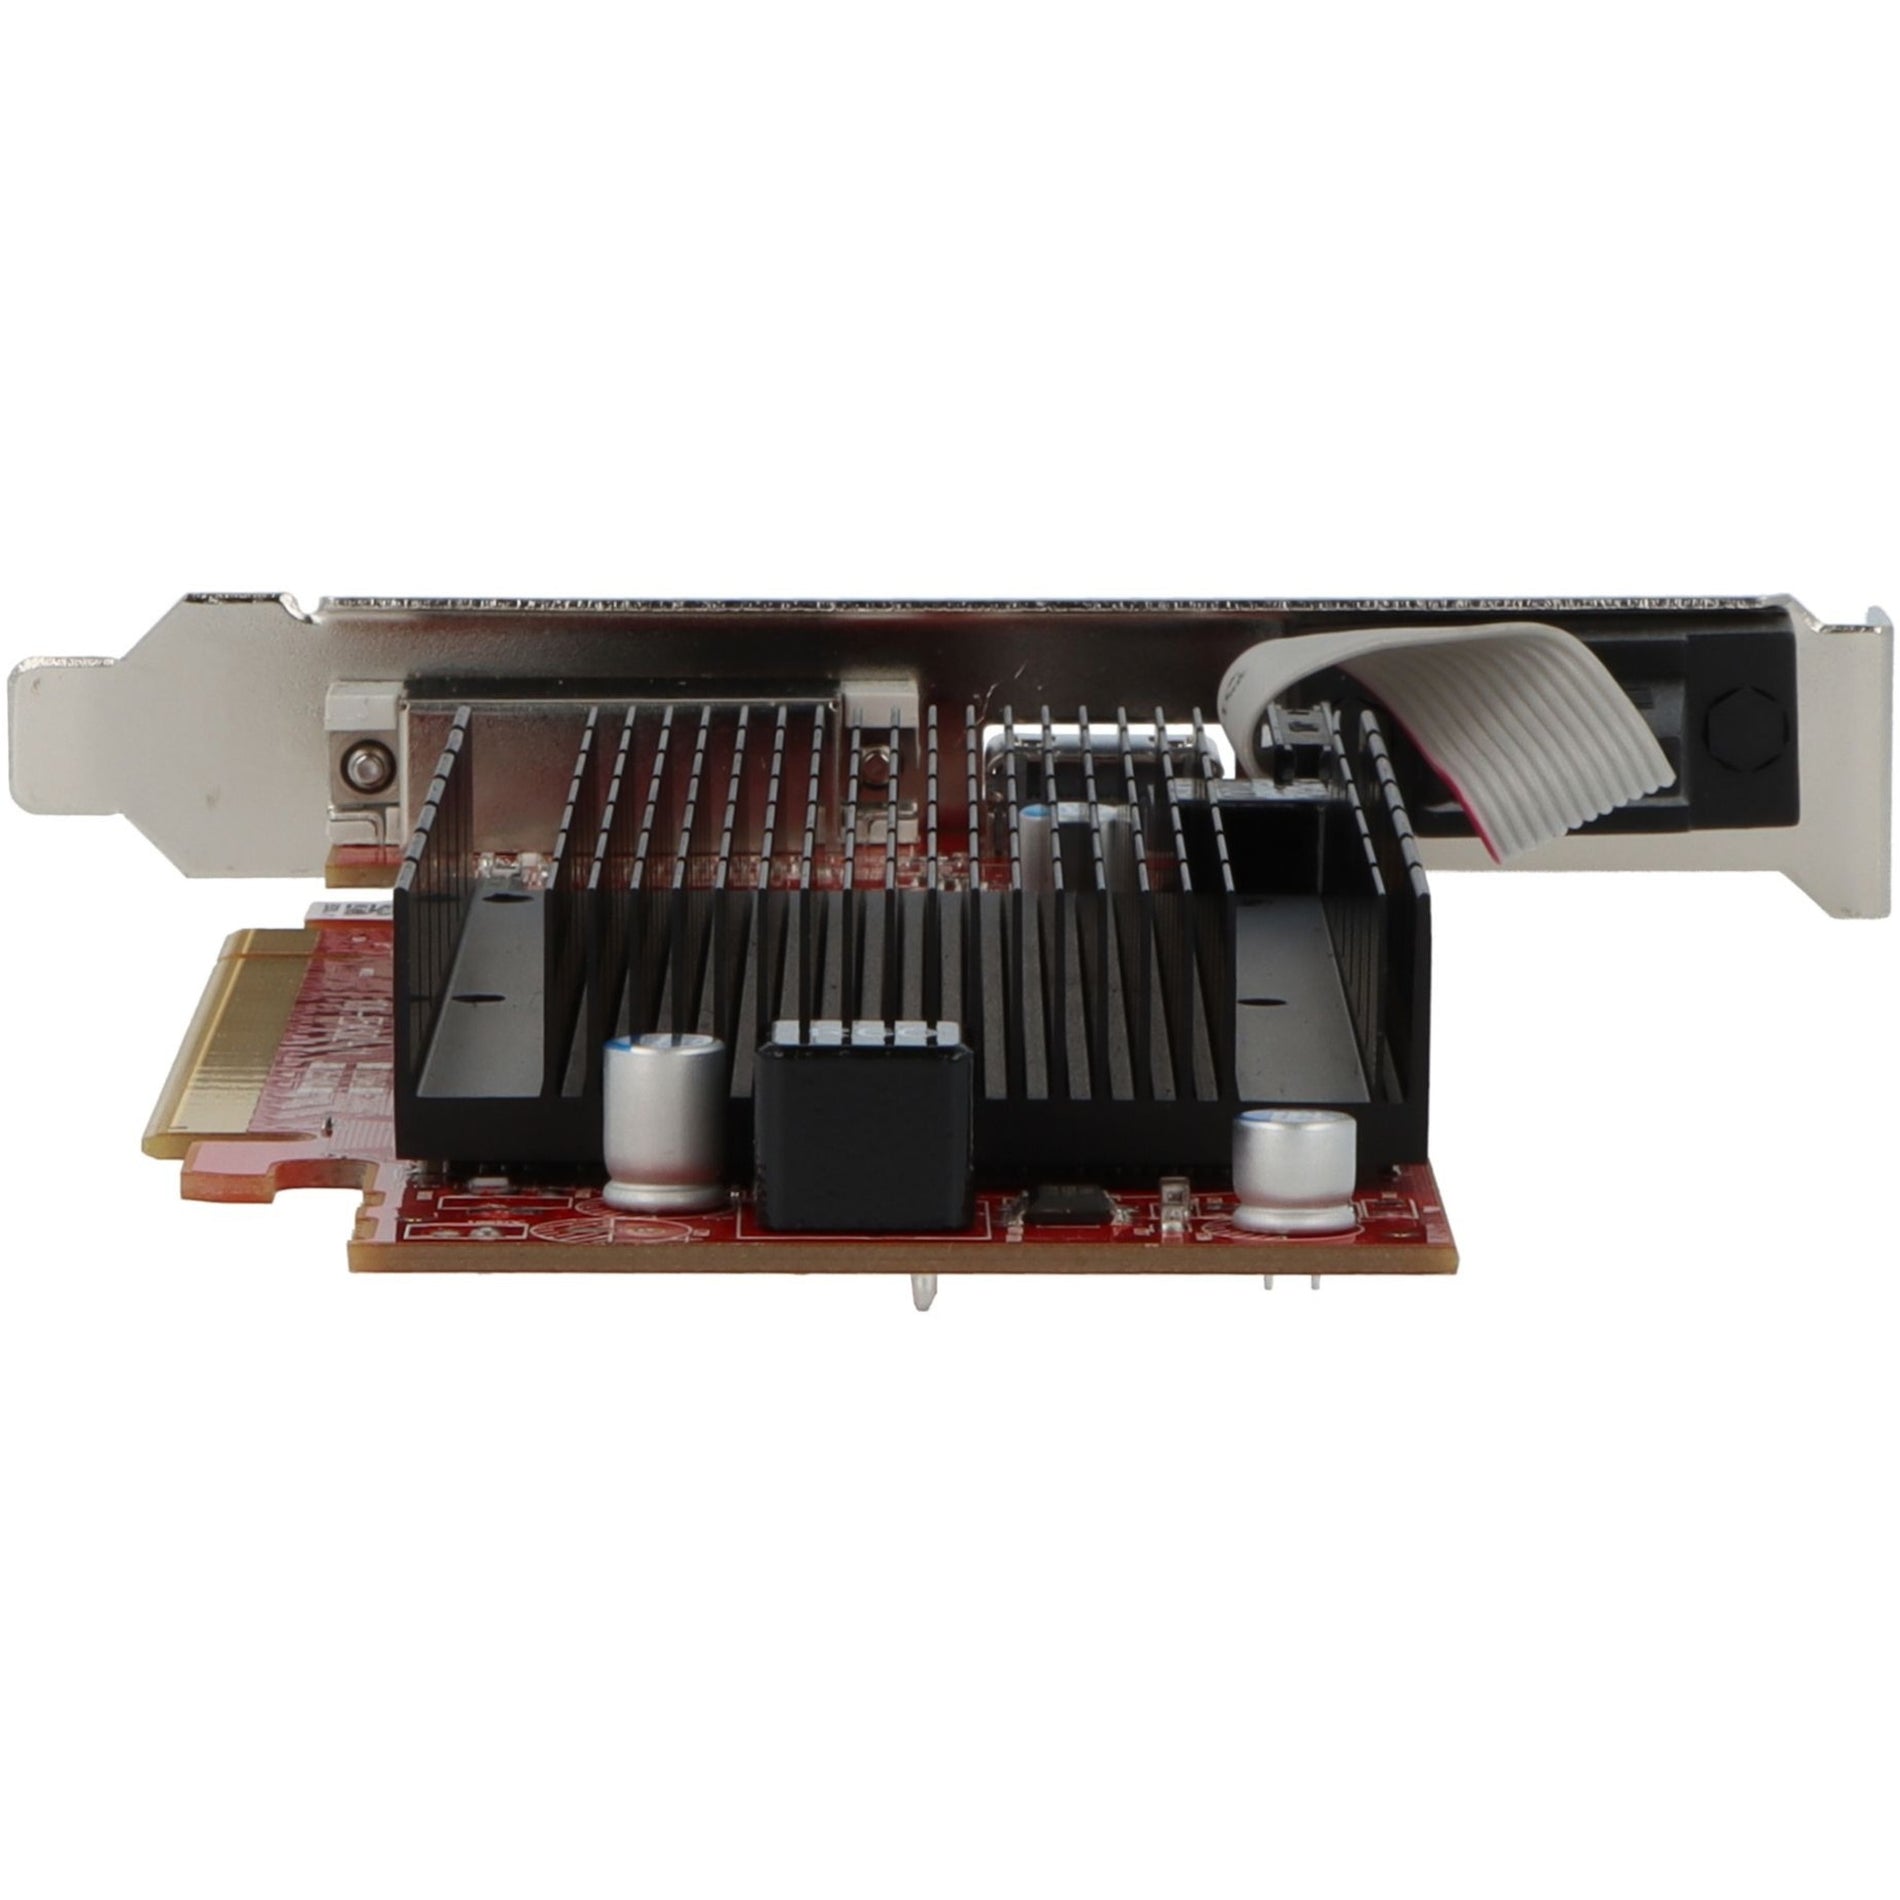 VisionTek 900479 Radeon 6350 1GB DDR3 Graphic Card, DVI-I, HDMI, VGA